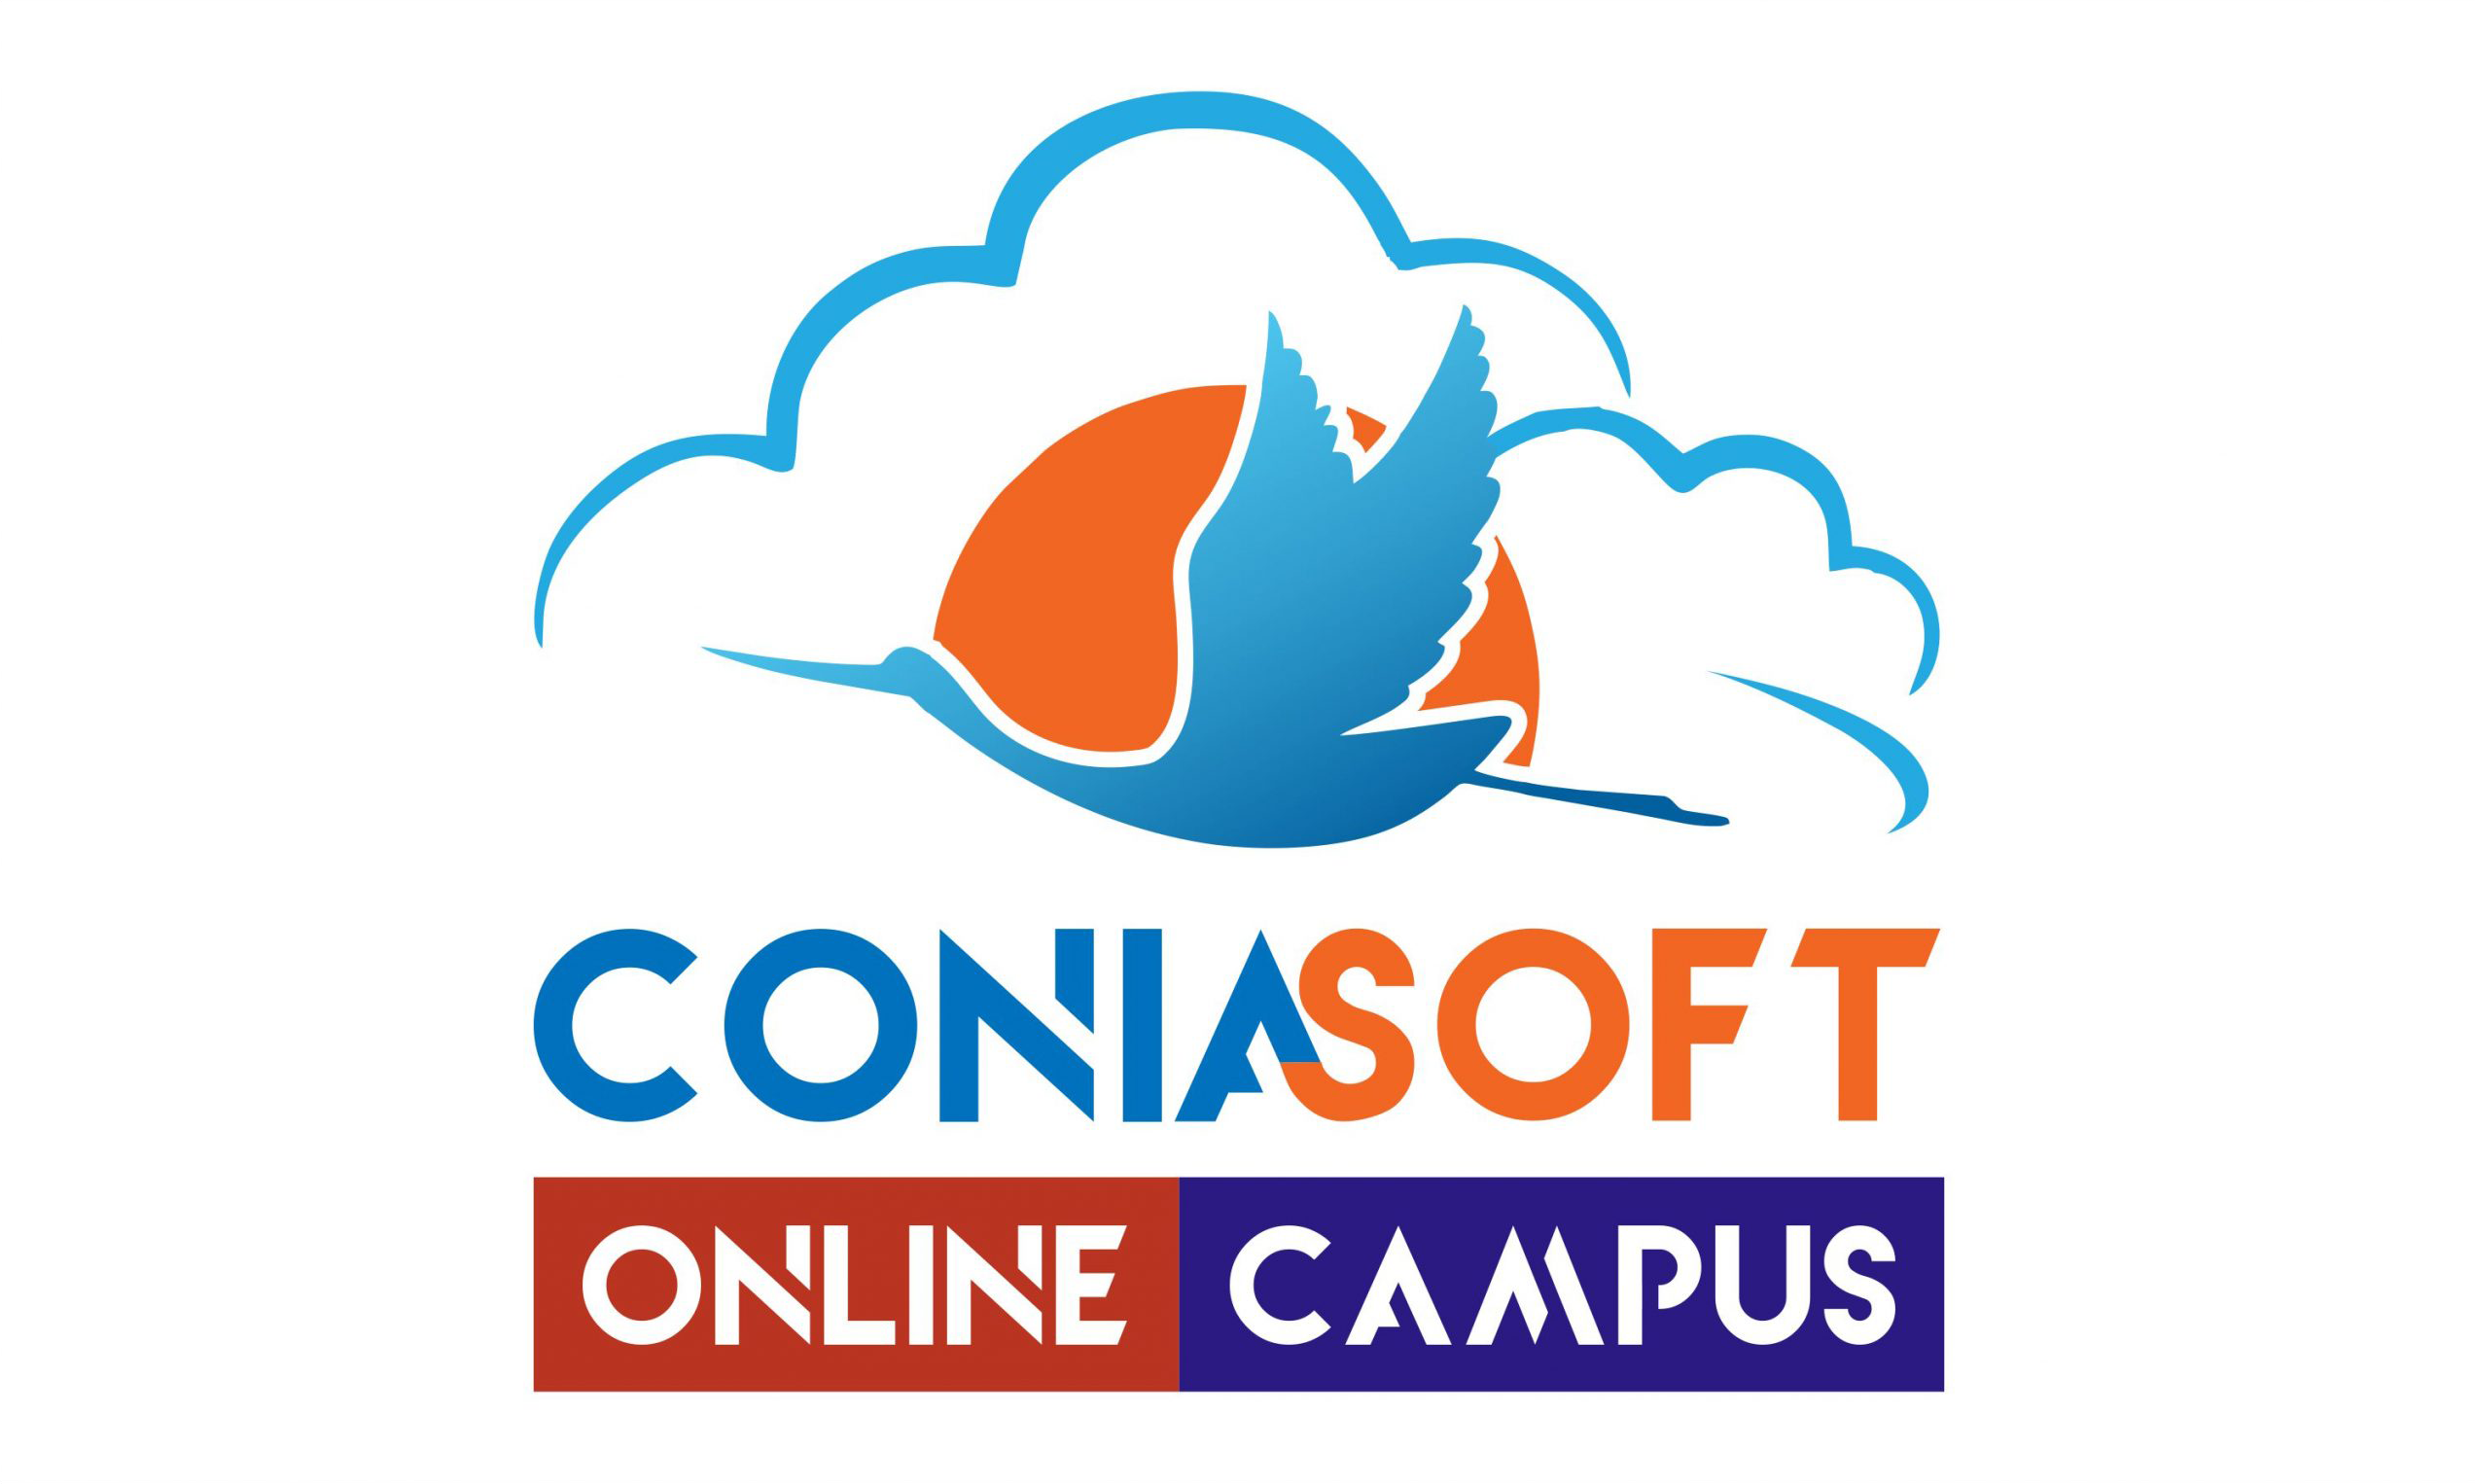 Conia-soft-Online-Campus-scaled-1